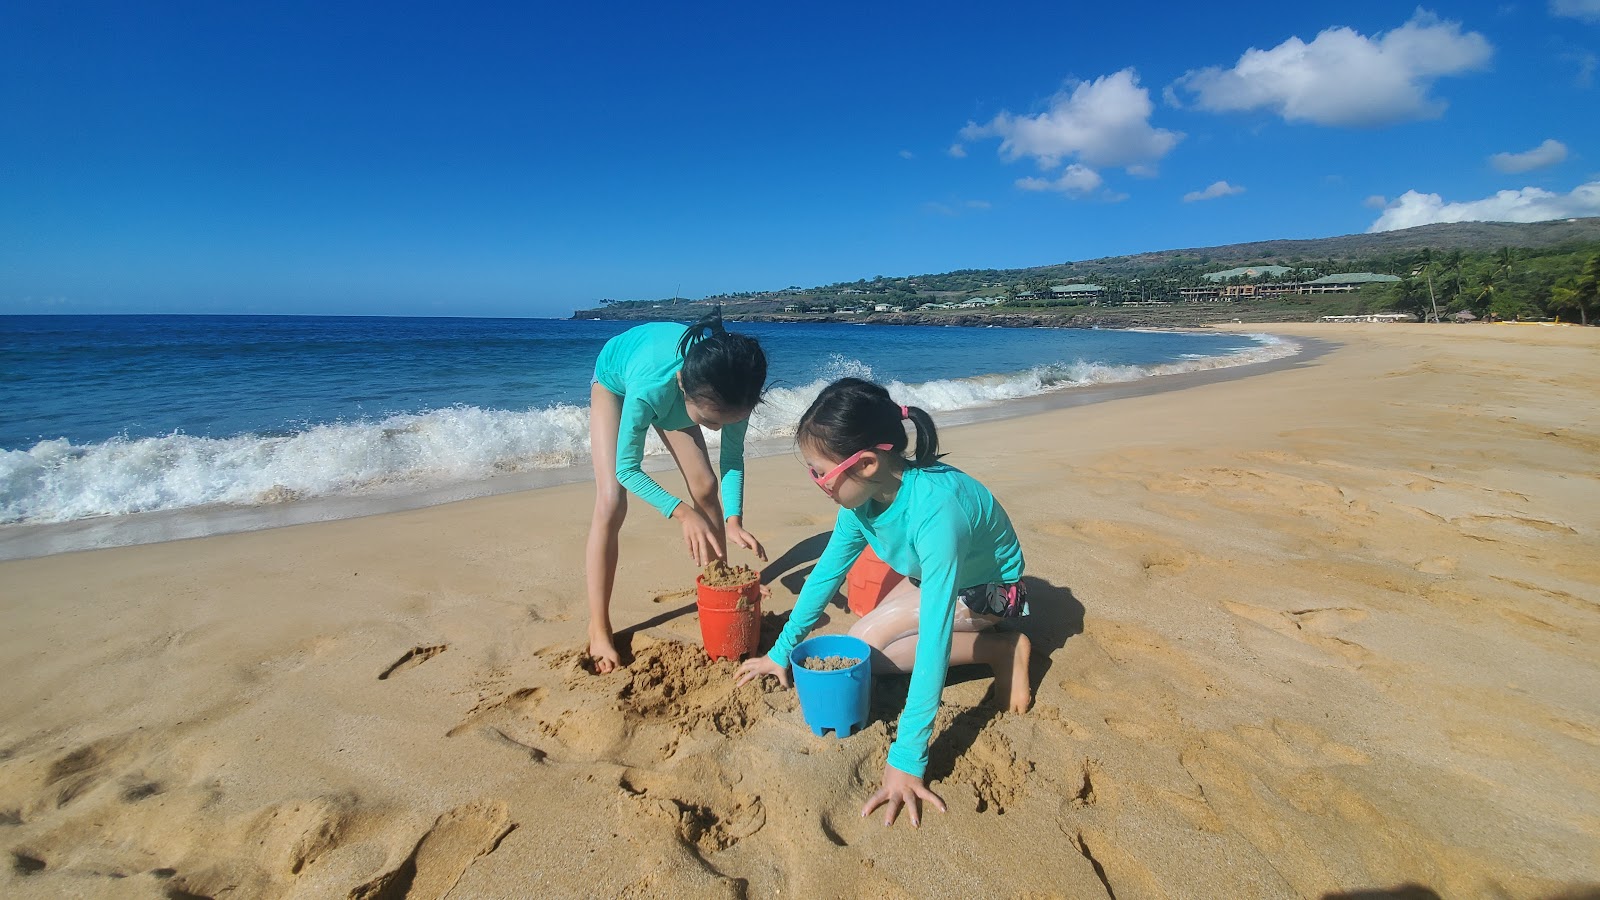 Image of two girls wearing teal rashguards playing on the beach in Lanai.